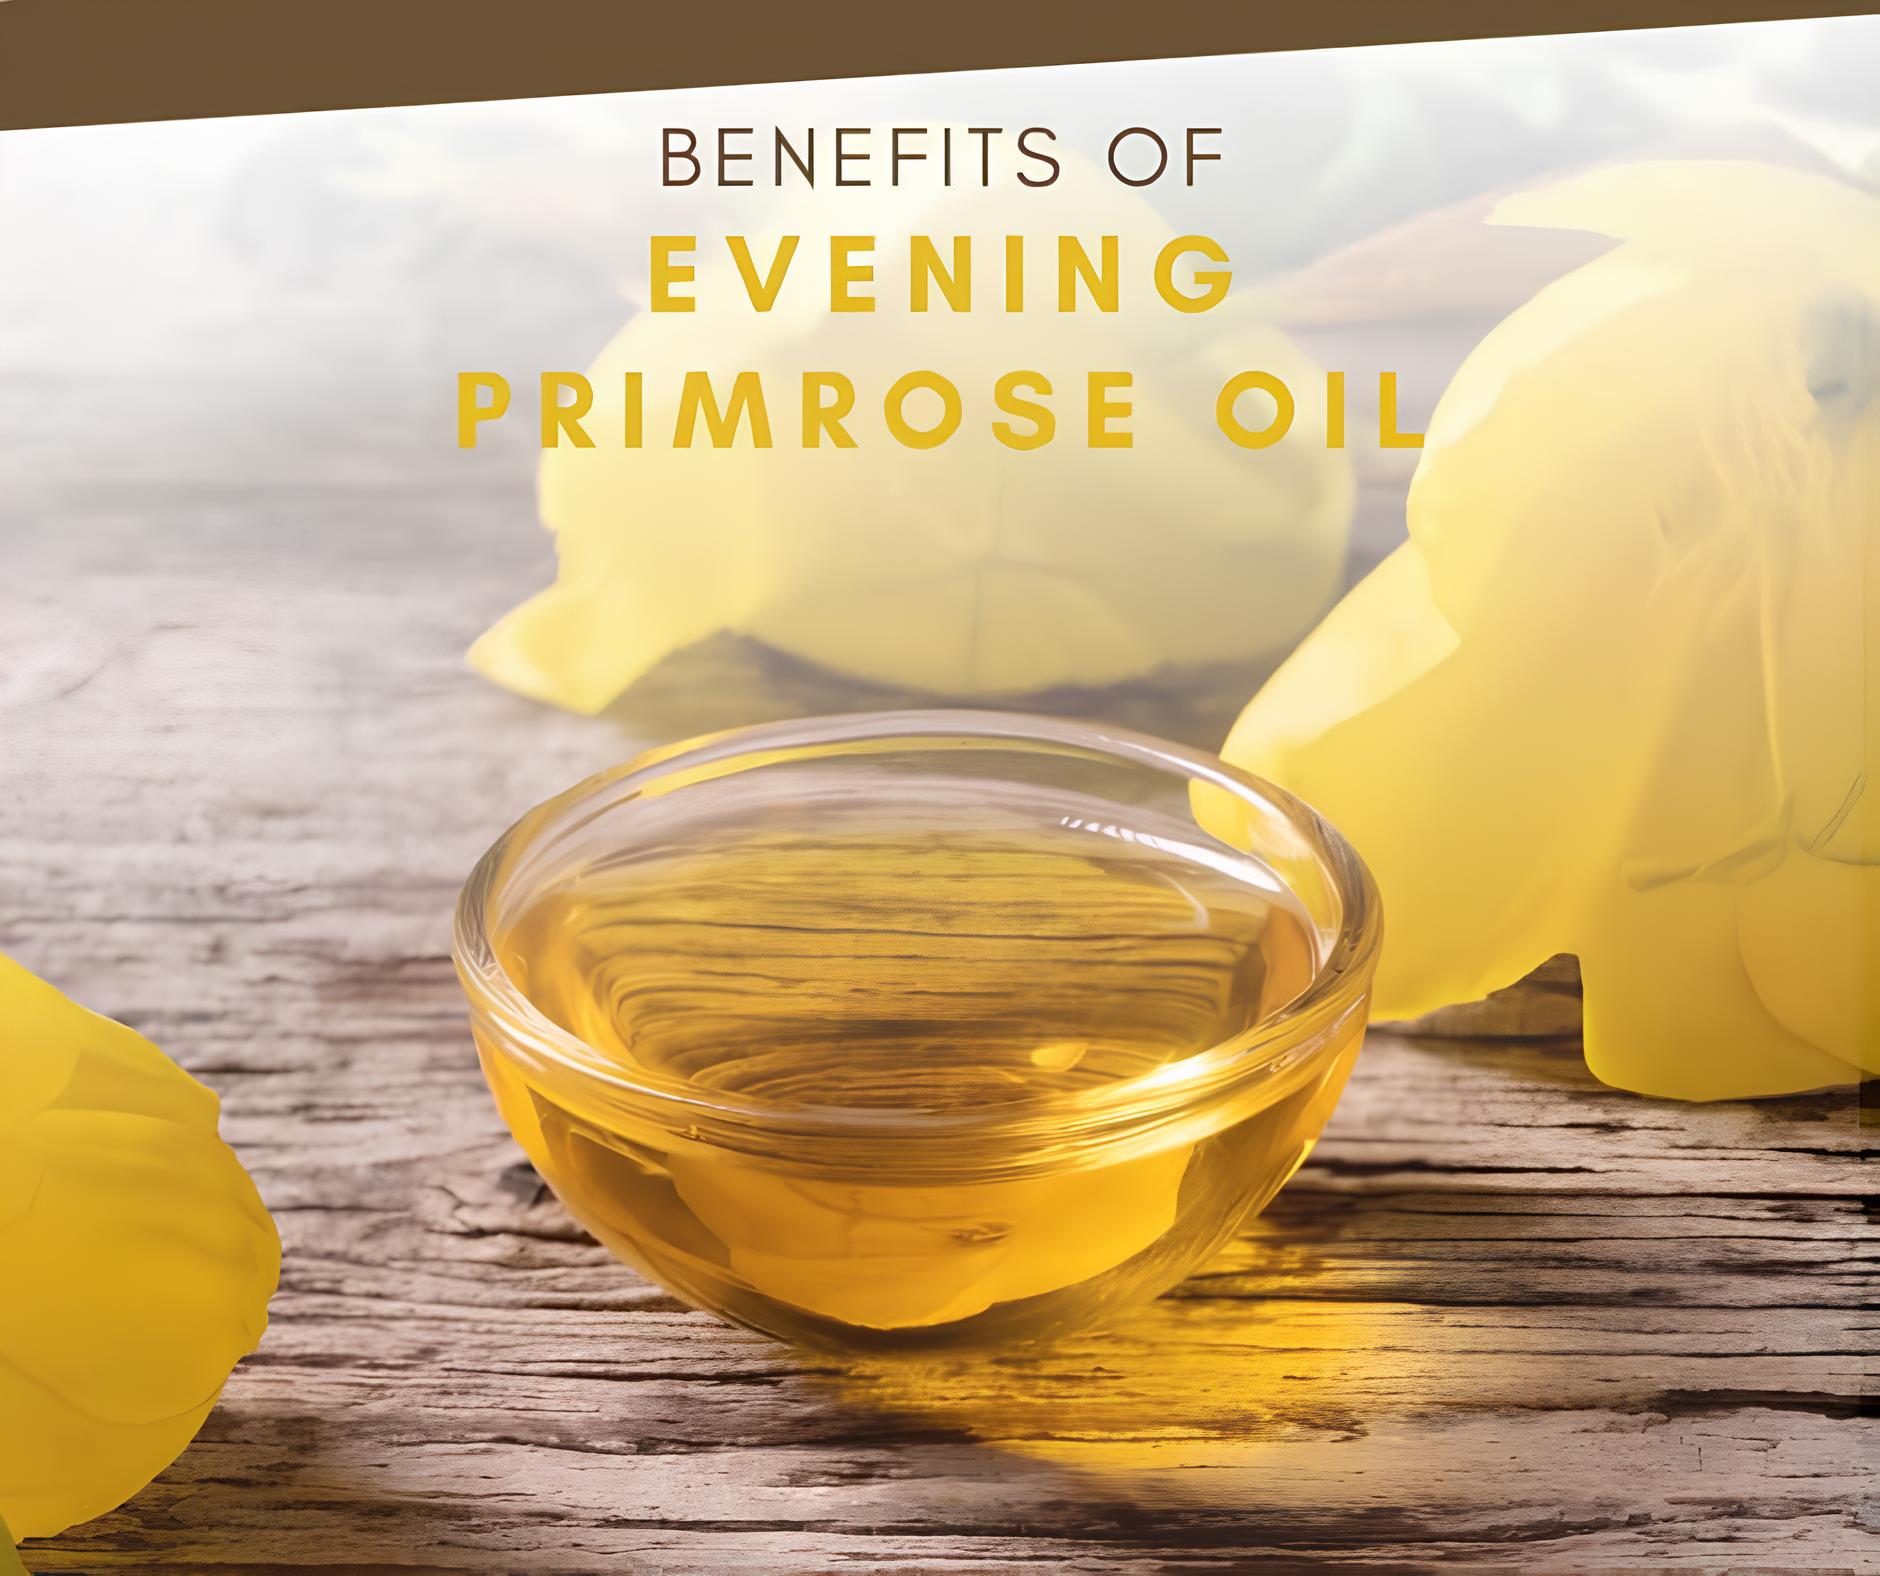 Benefits of Evening Primrose Oil